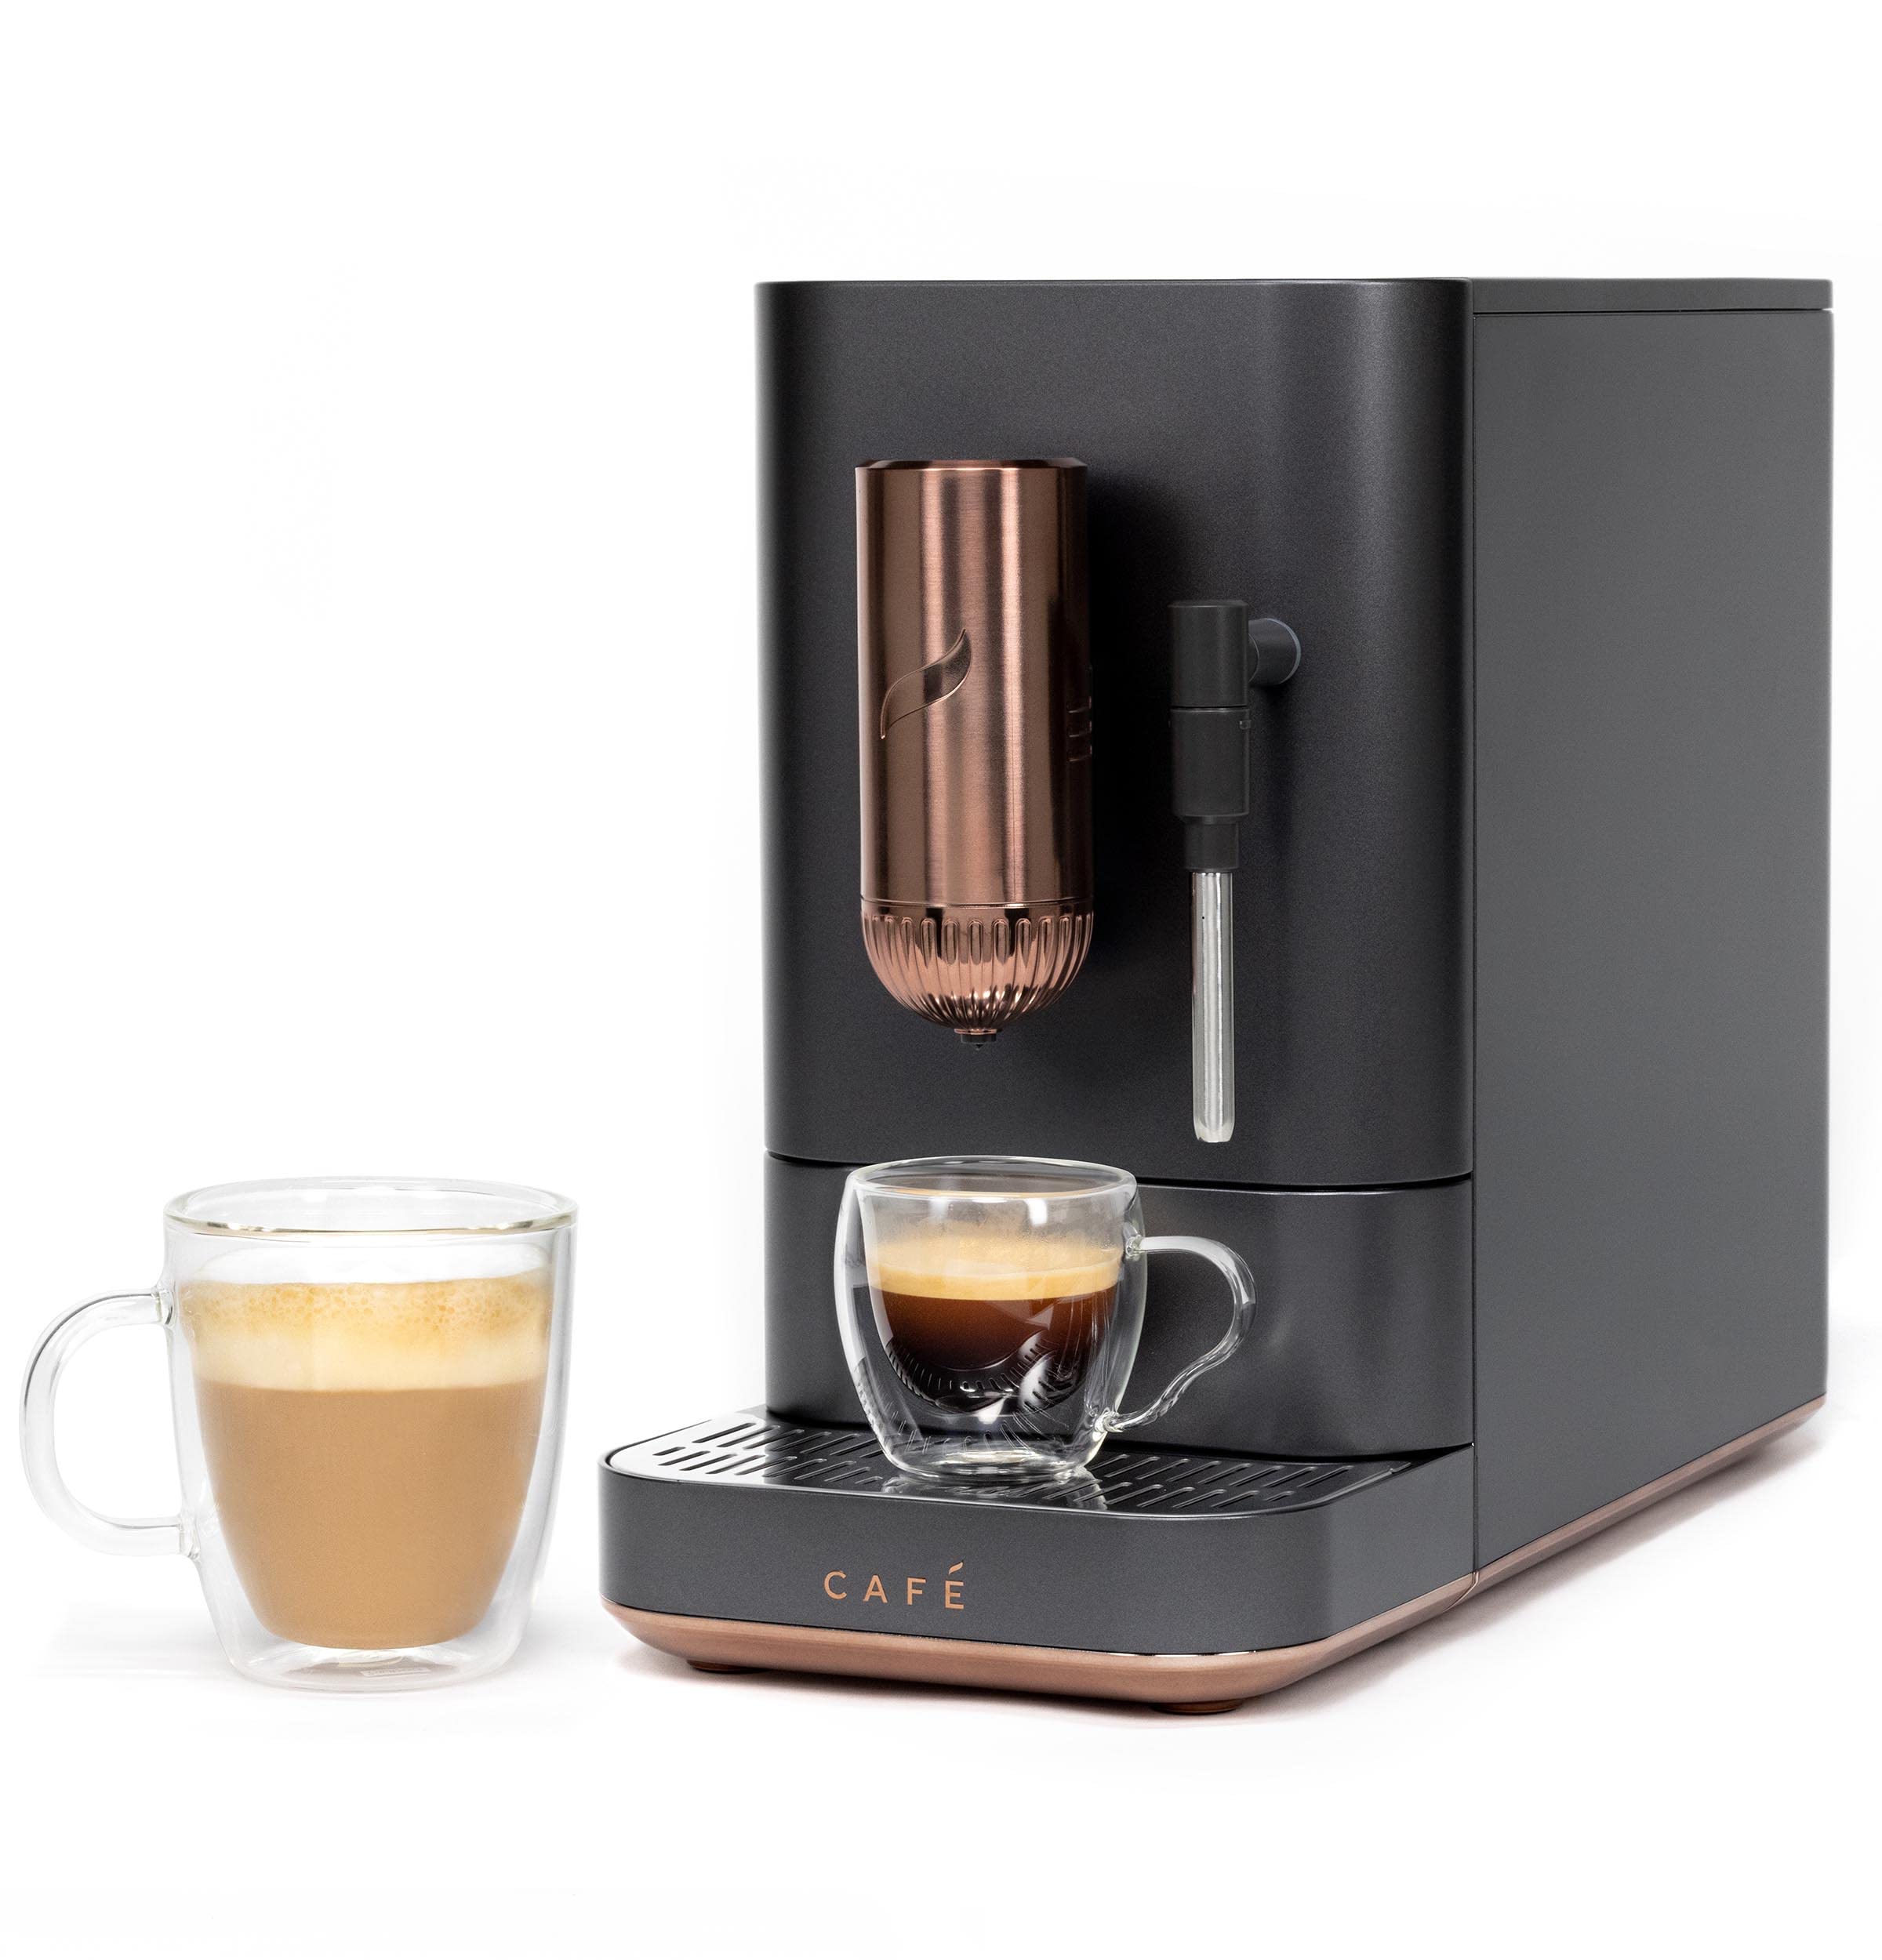 Café Affetto Automatic Espresso Machine w/ WiFi Connection for Drink Customization (Matte Black) $242.34 + Free Shipping